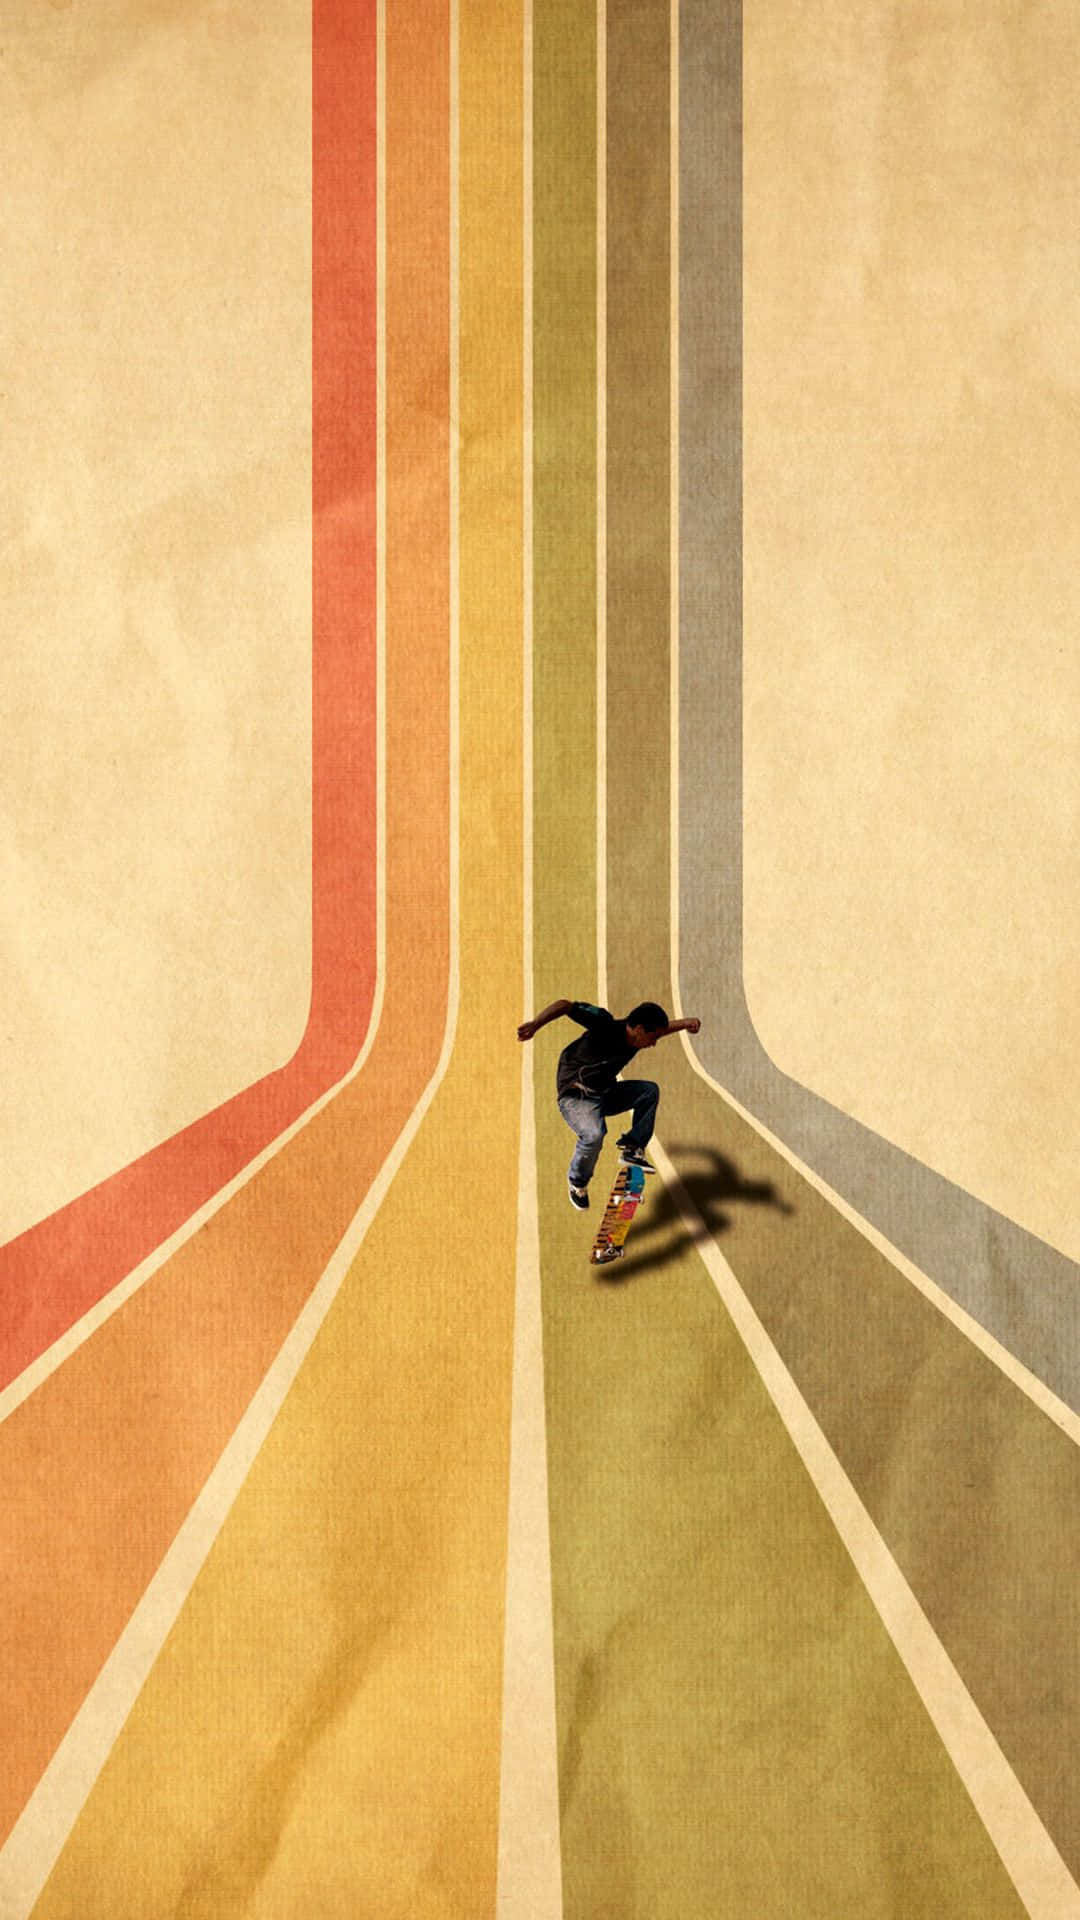 A Skateboarder Is Riding A Skateboard Down A Colorful Stripe Wallpaper